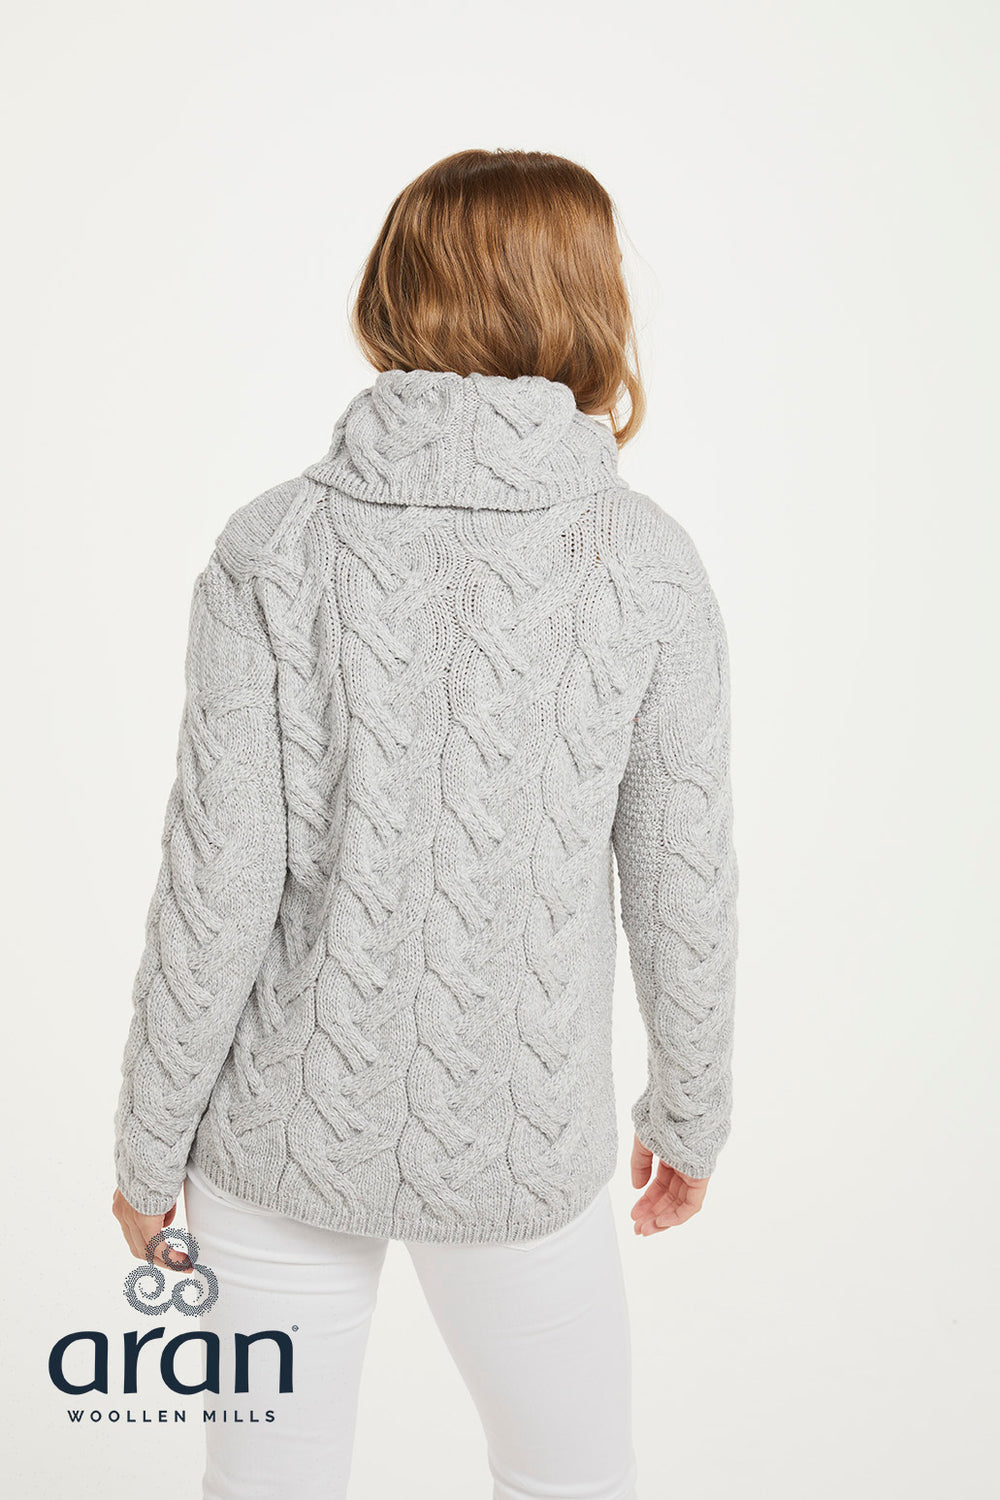 Aran Wool Super Soft Pullover Sweater Feather Grey (B692 790)